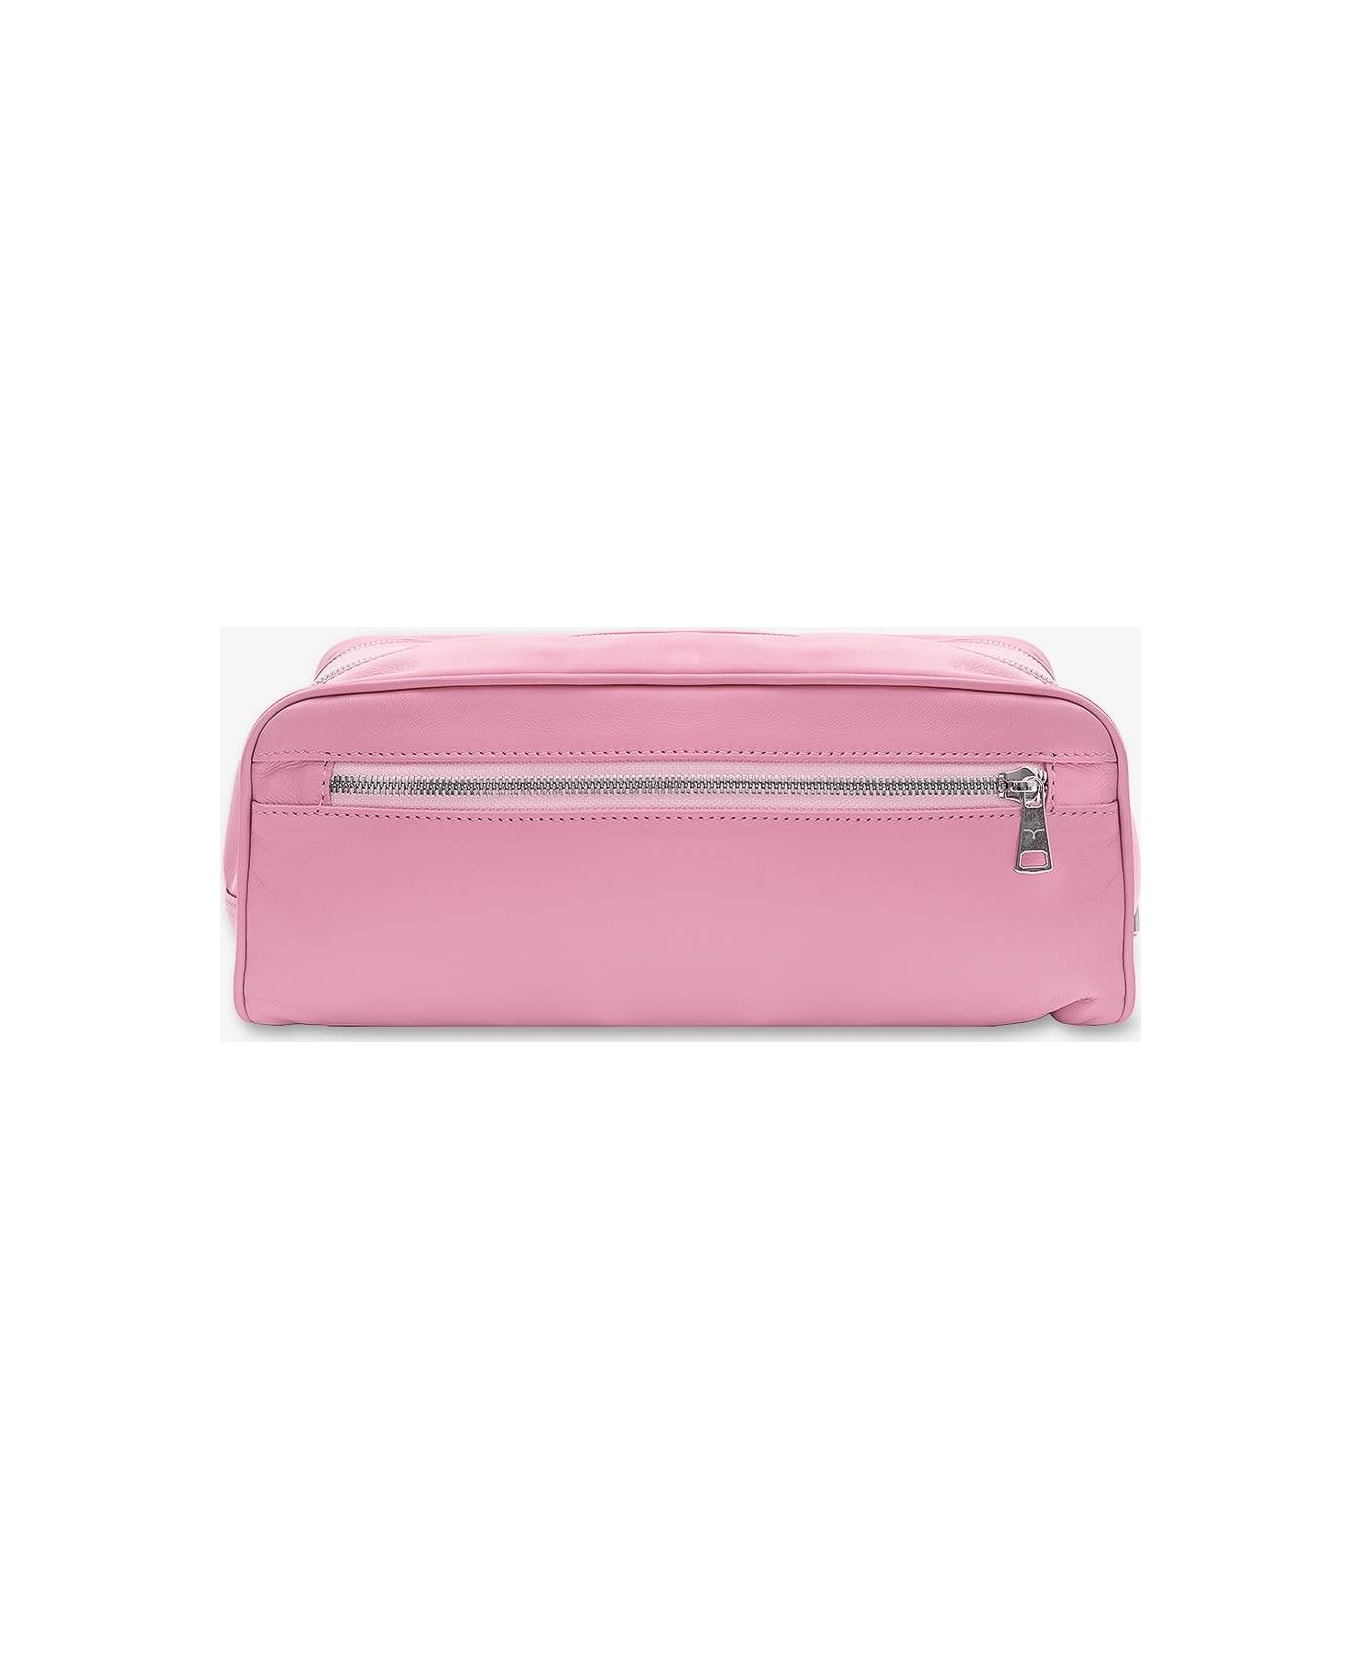 Larusmiani Wash Bag'tzar' Luggage - Pink